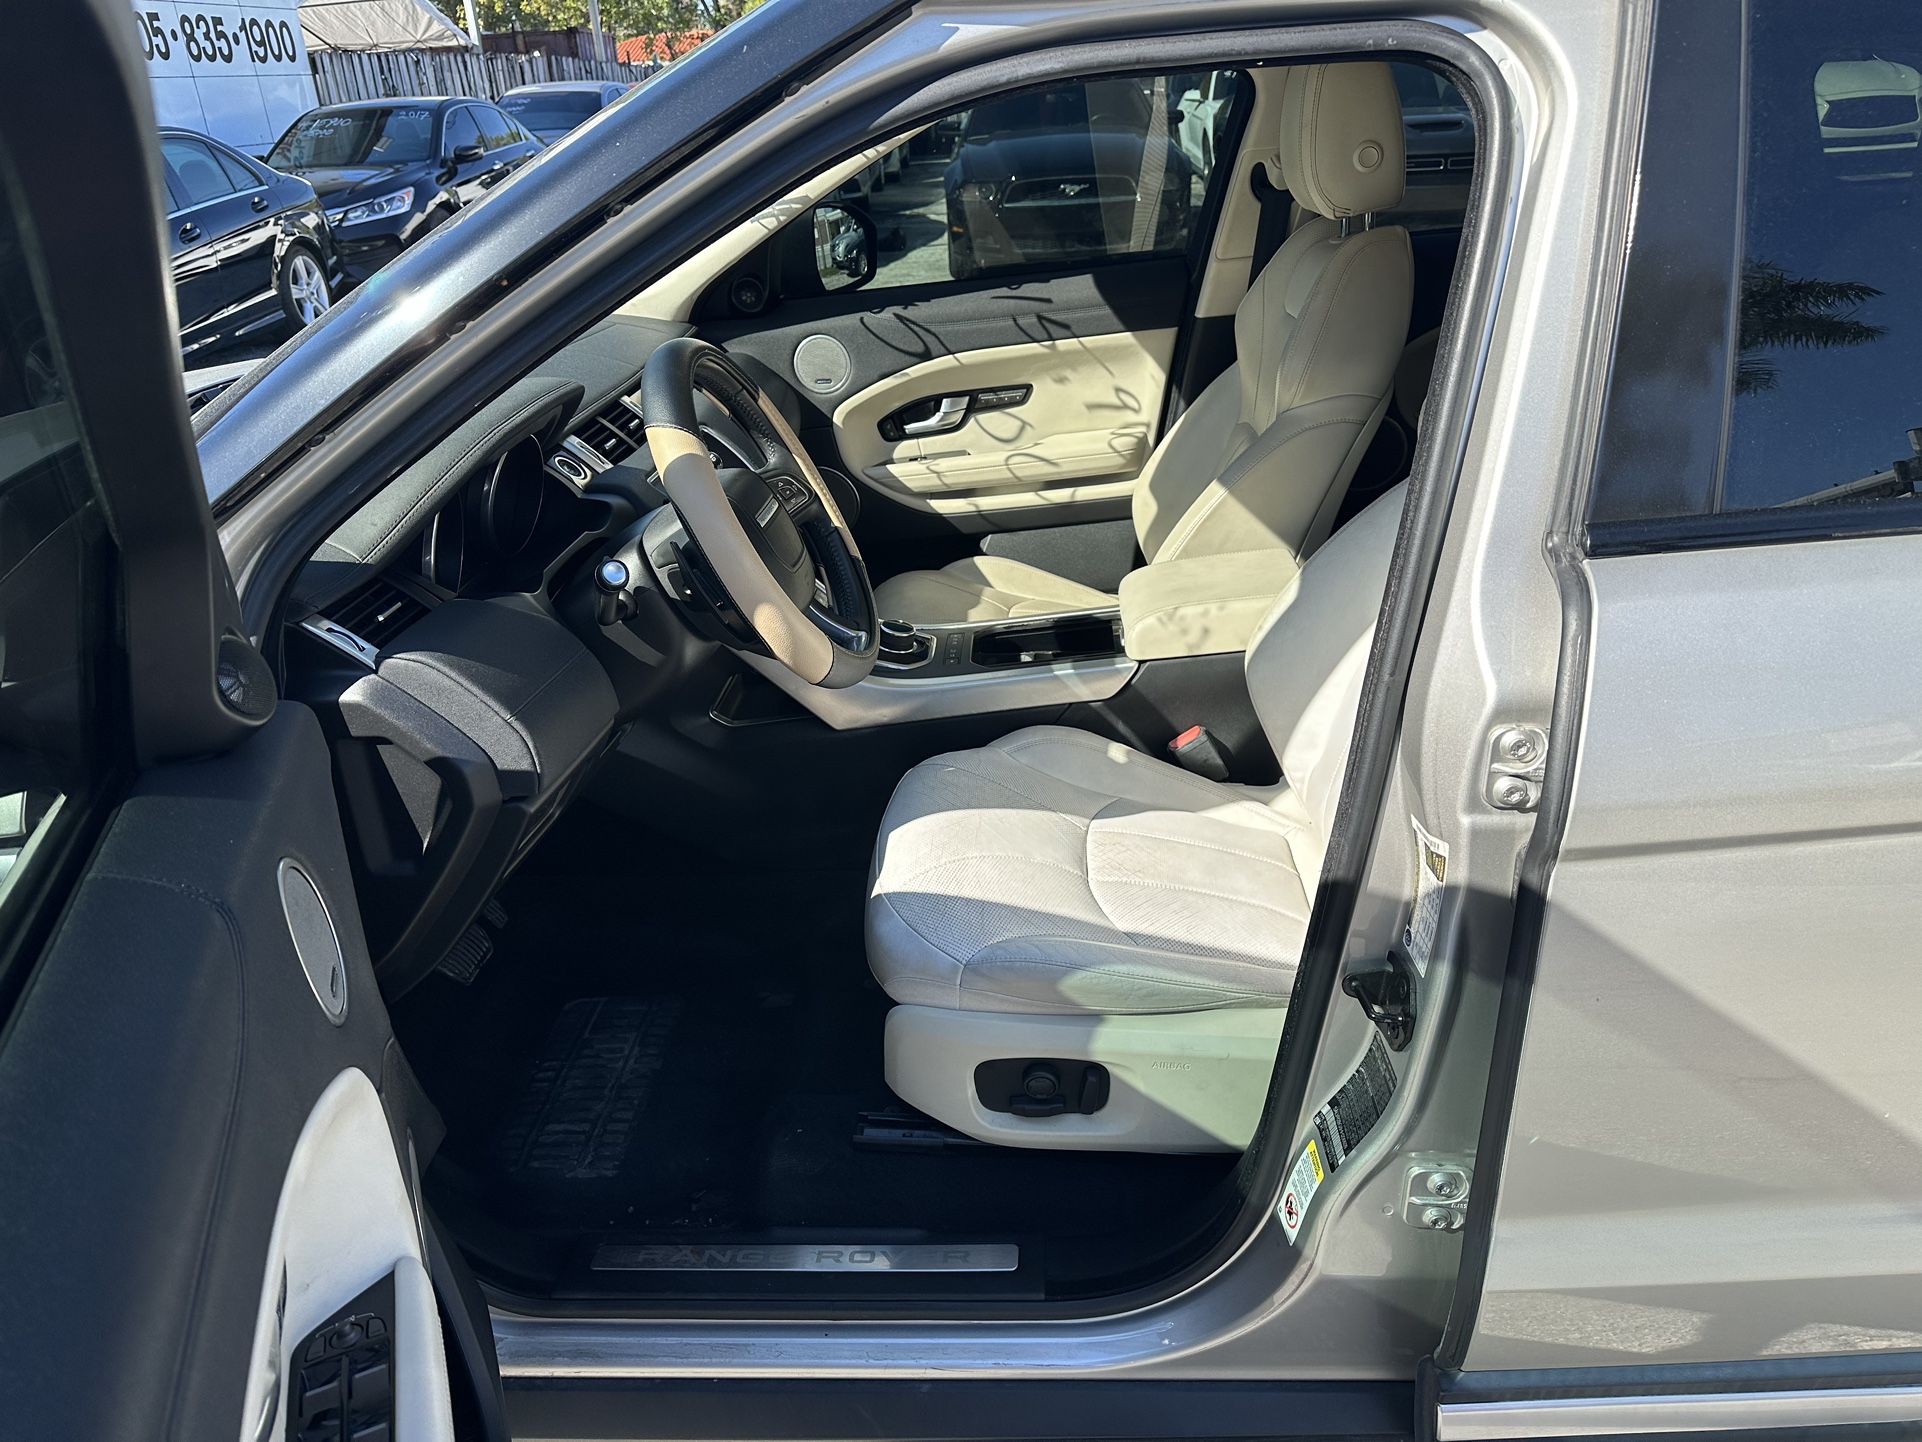 used 2017 Land Rover evoque - interior view 2